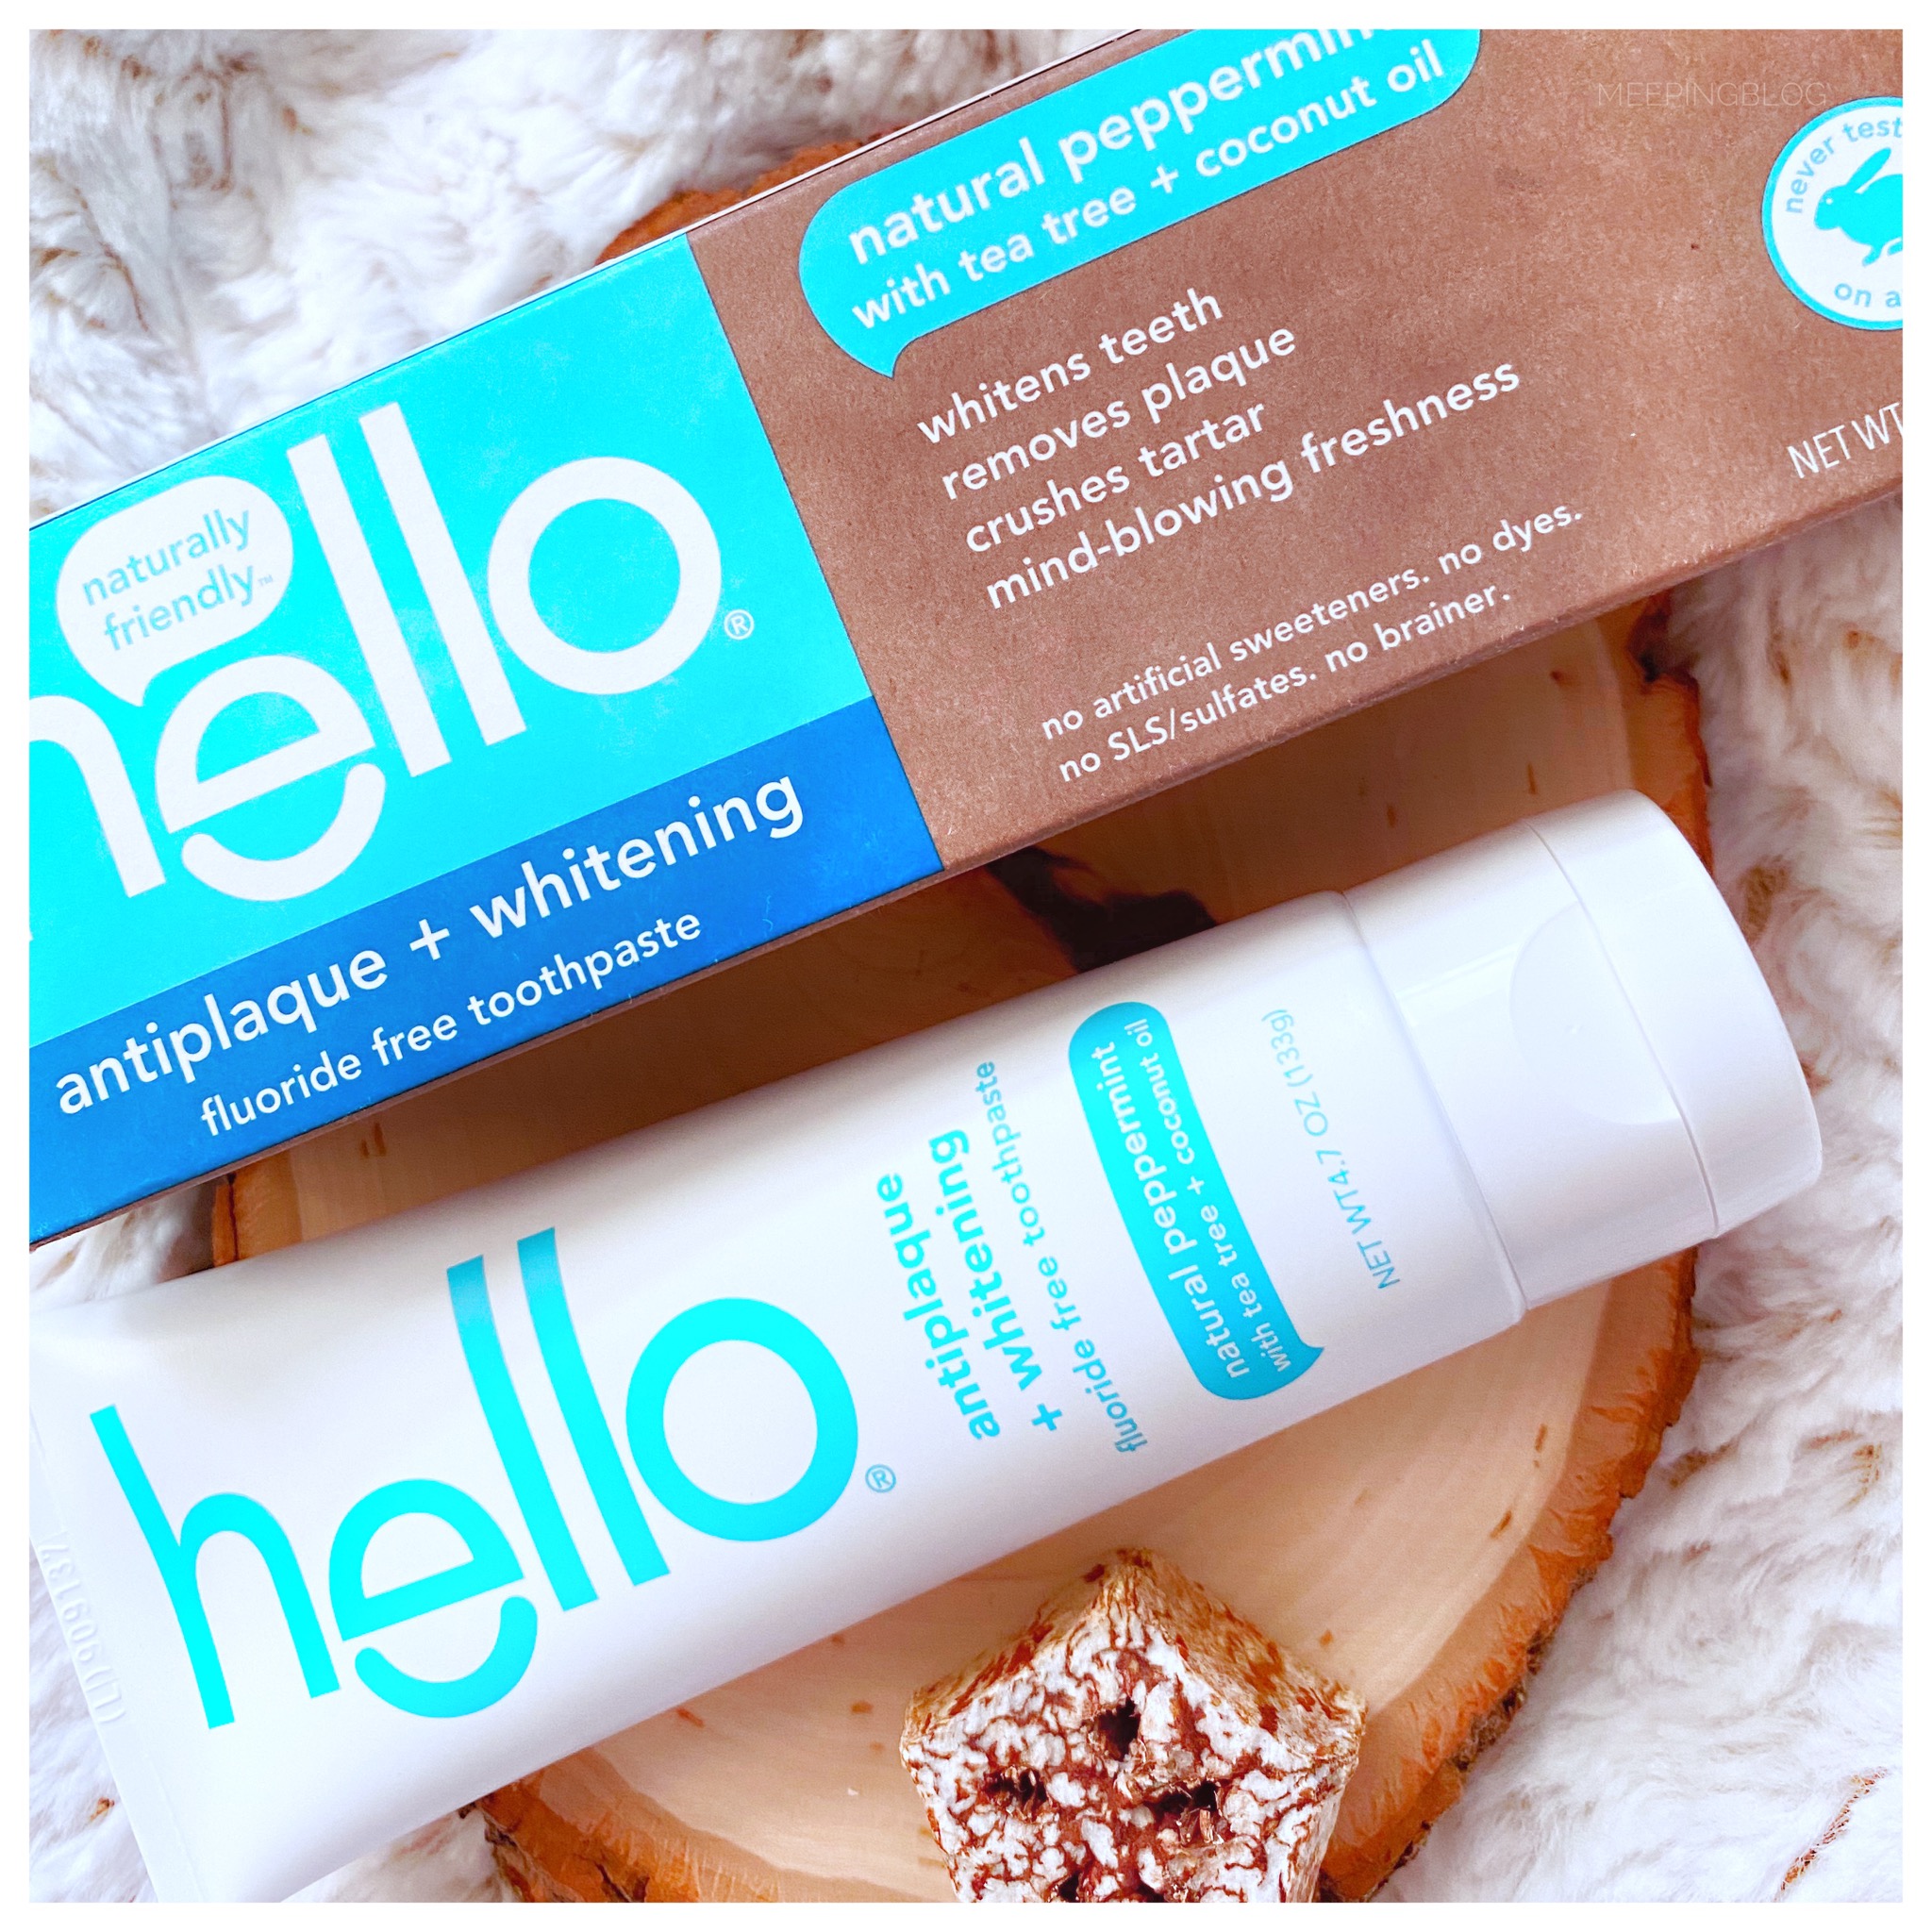 Hello’s Antiplaque + Whitening Fluoride Free Toothpaste | Review